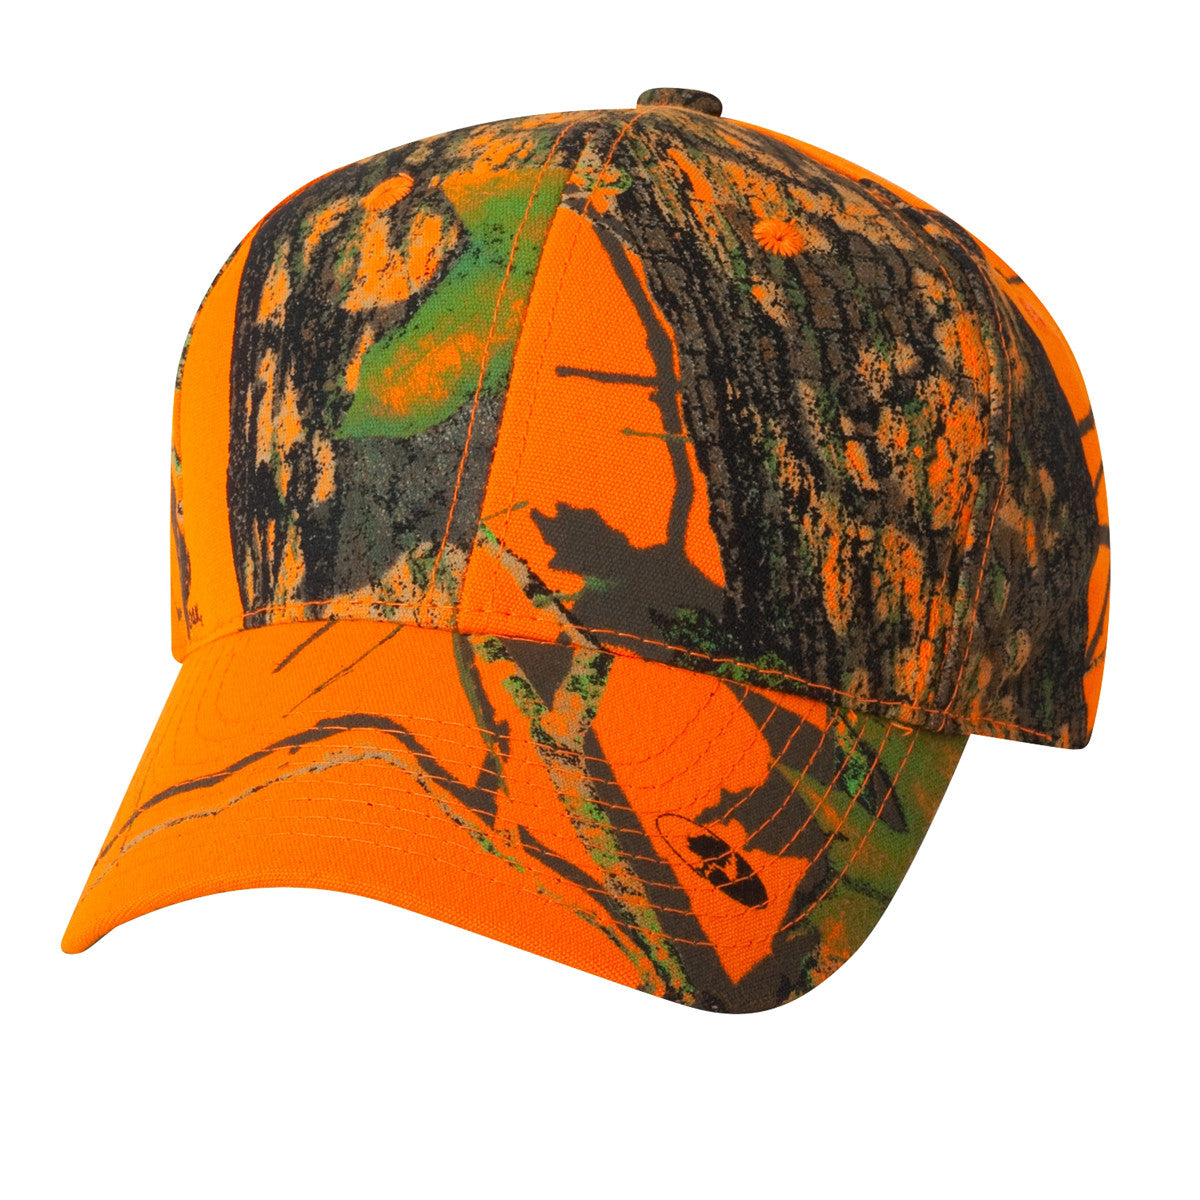 Mossy Oak Break Up Blaze Orange Logo Camo Mesh Trucker Hat Cap Snapback Mid Profile Structured